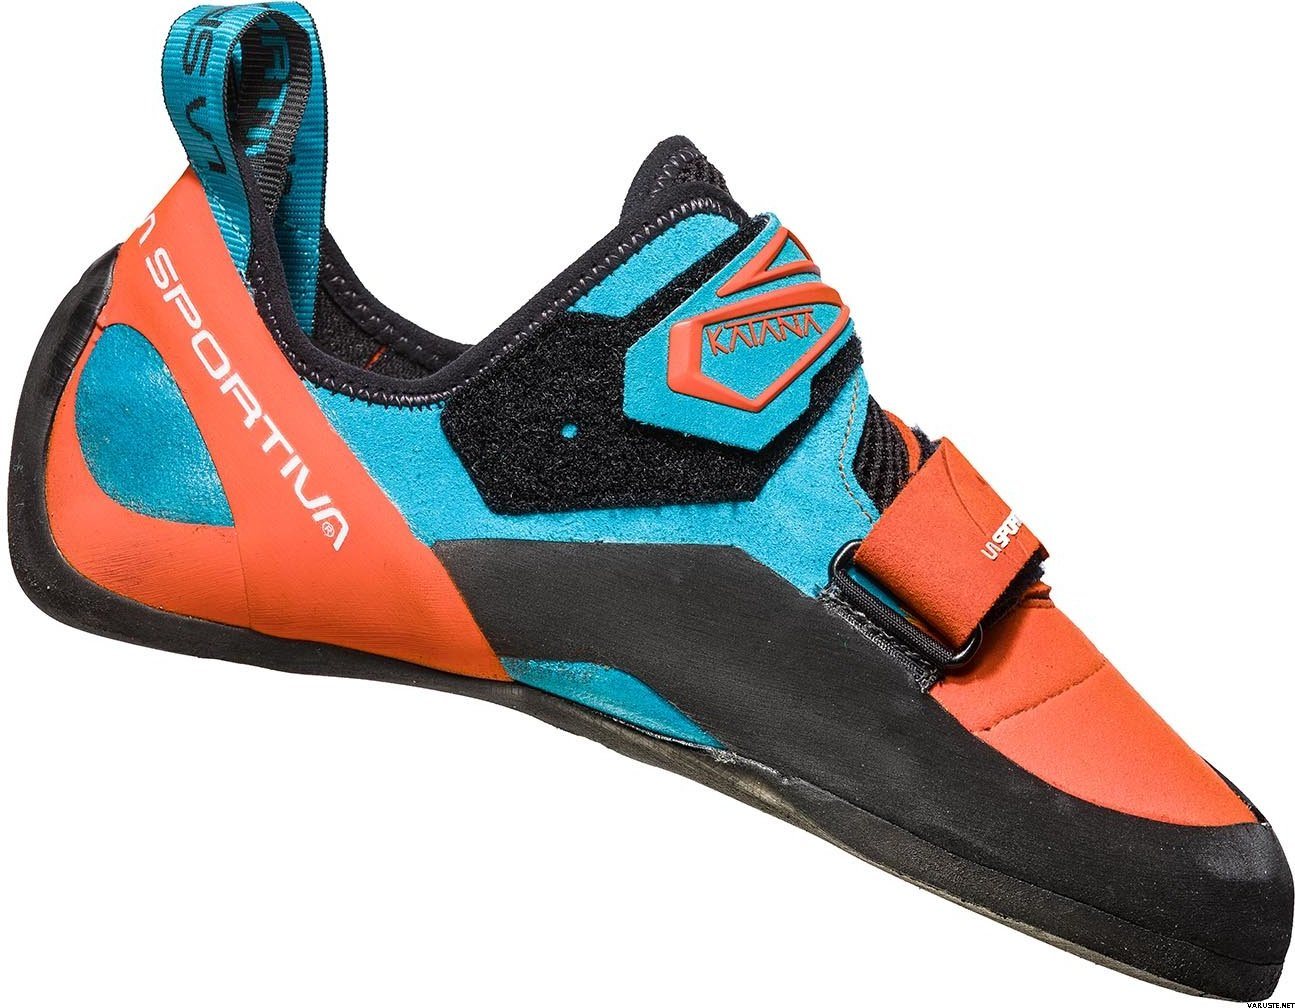 La Sportiva Katana | Velcro strapped climbing shoes | Varuste.net English